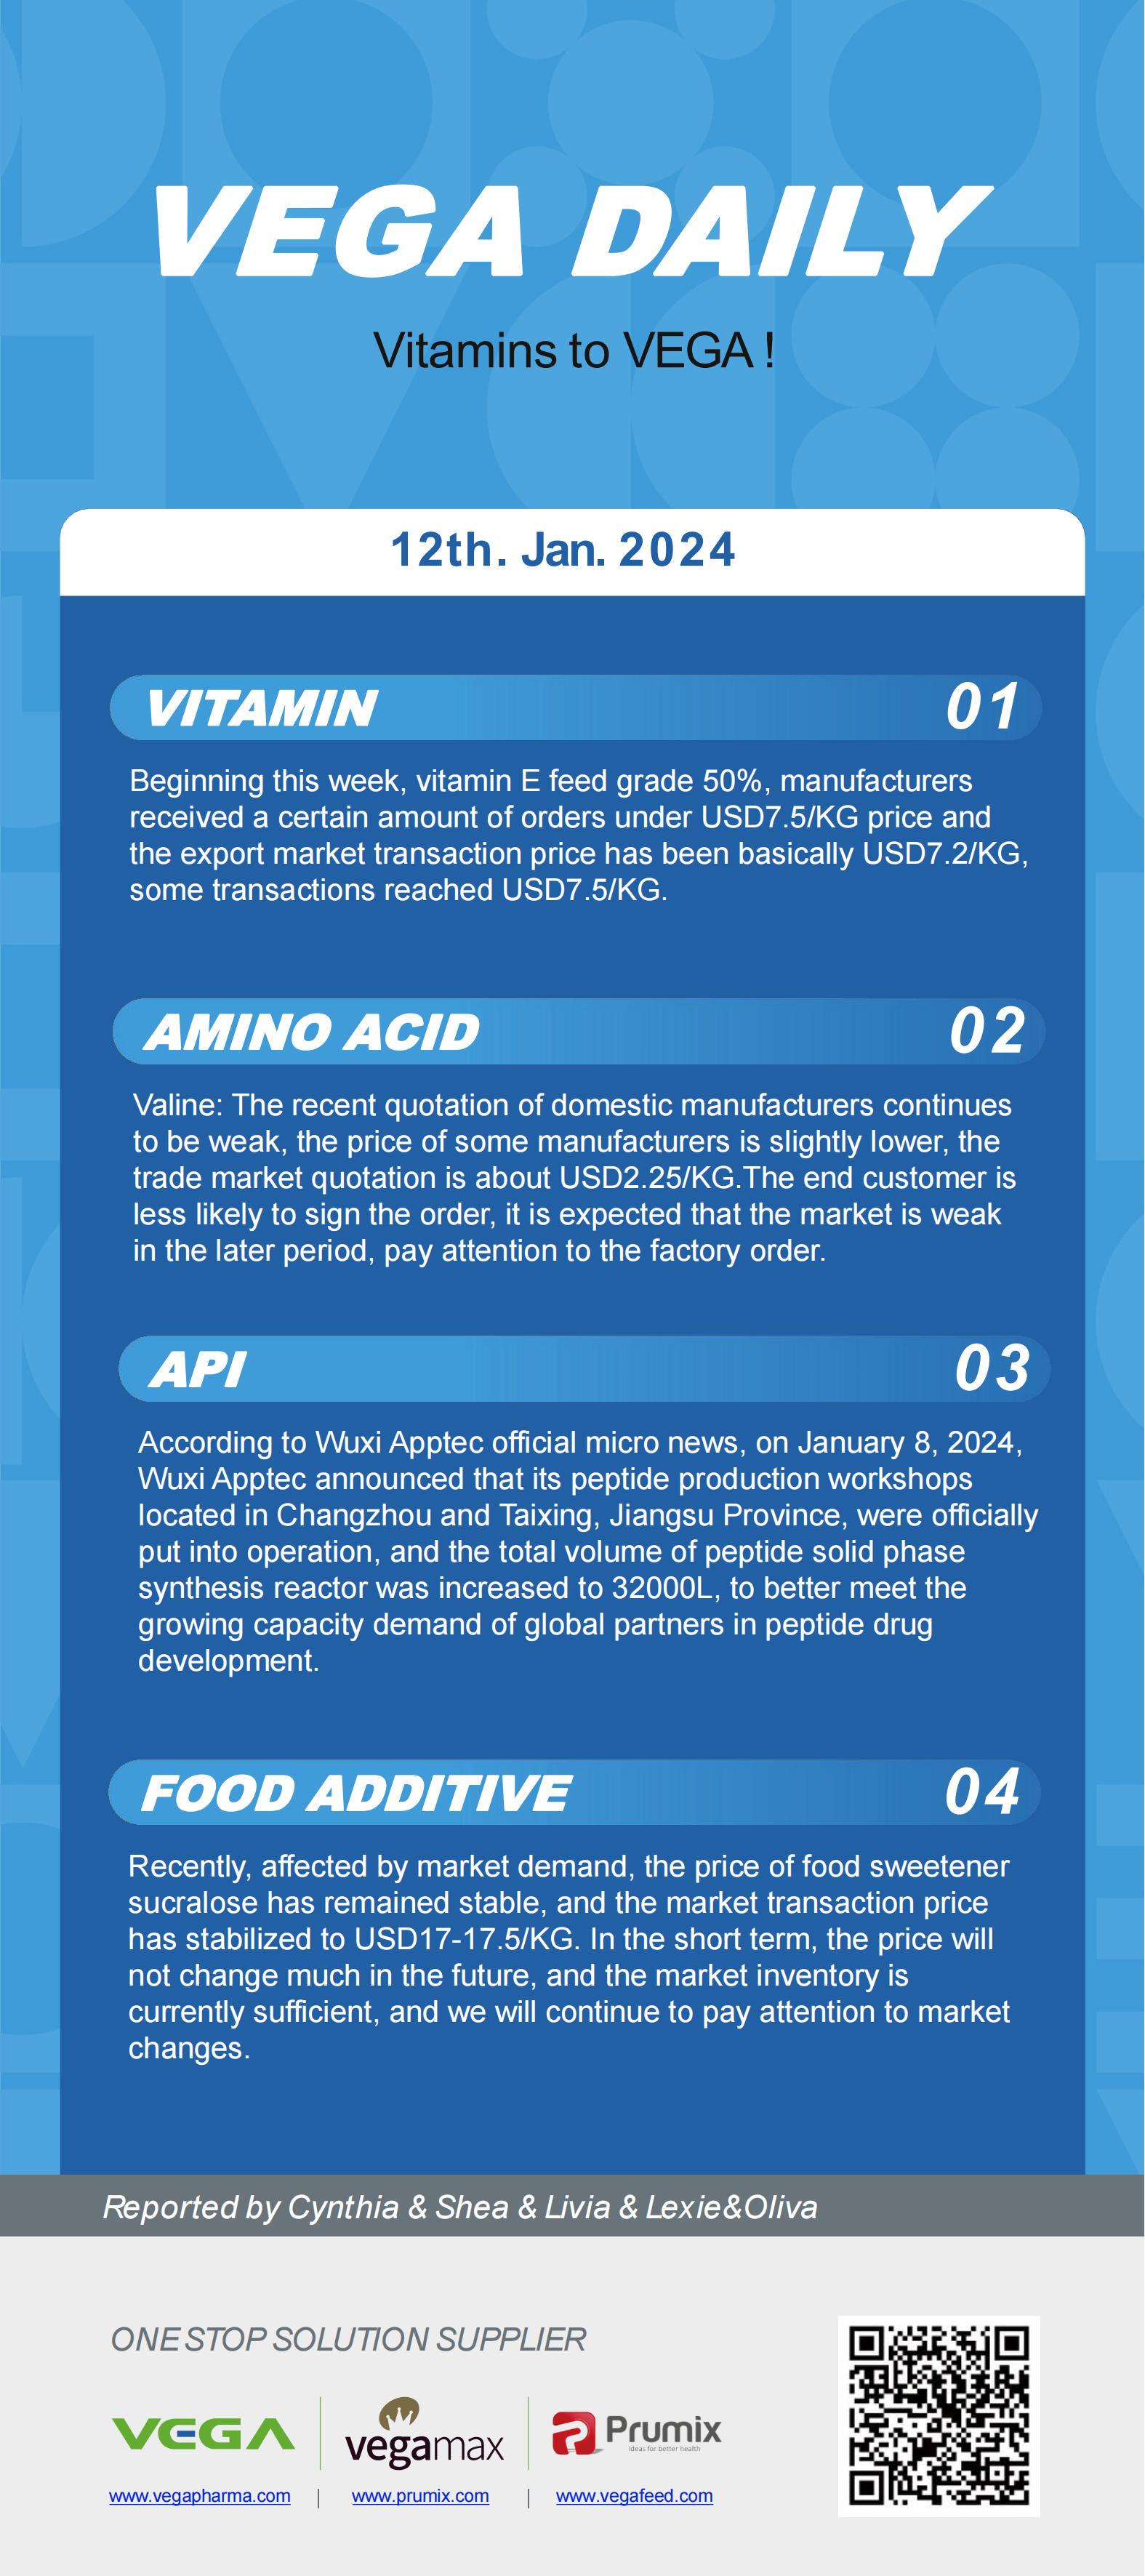 Vega Daily Dated on Jan 12th 2024 Vitamin Amino Acid APl Food Additives.jpg